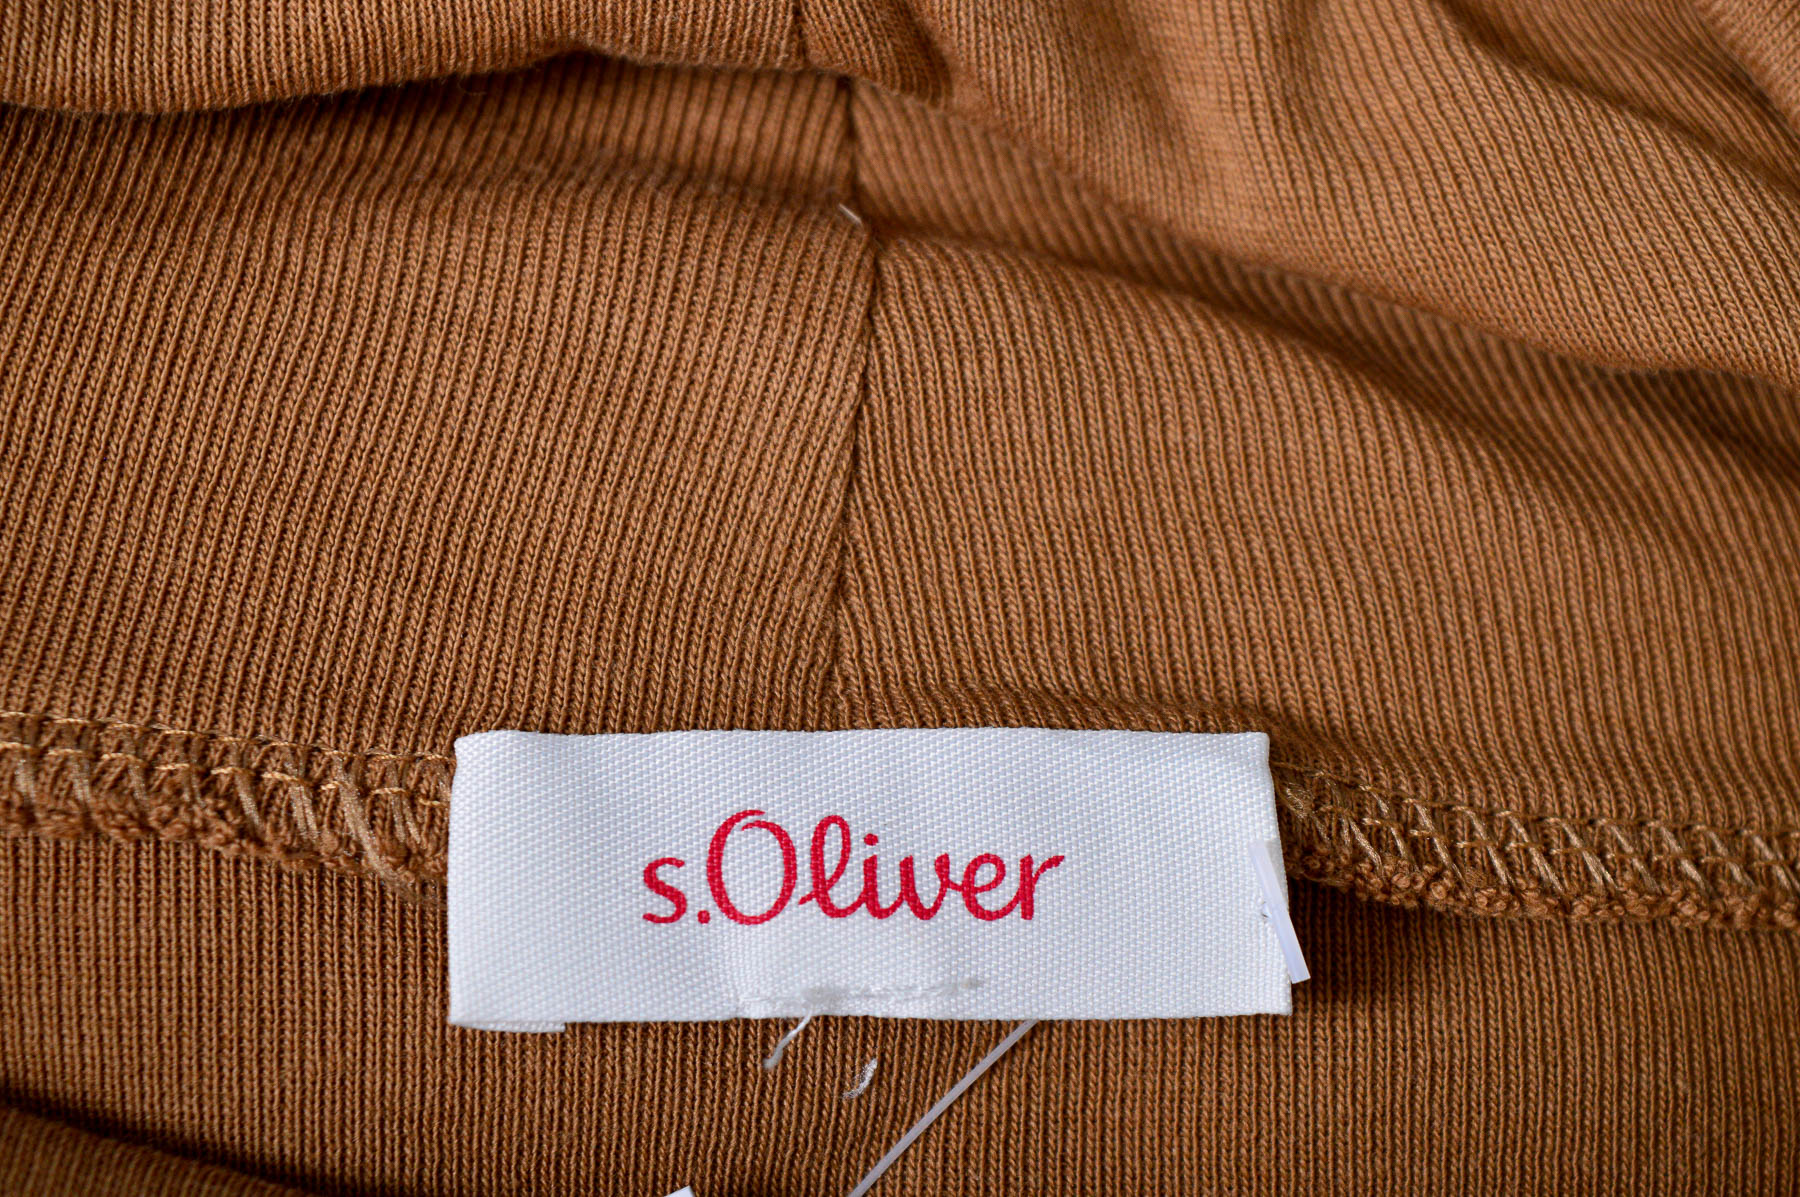 Women's blouse - S.Oliver - 2